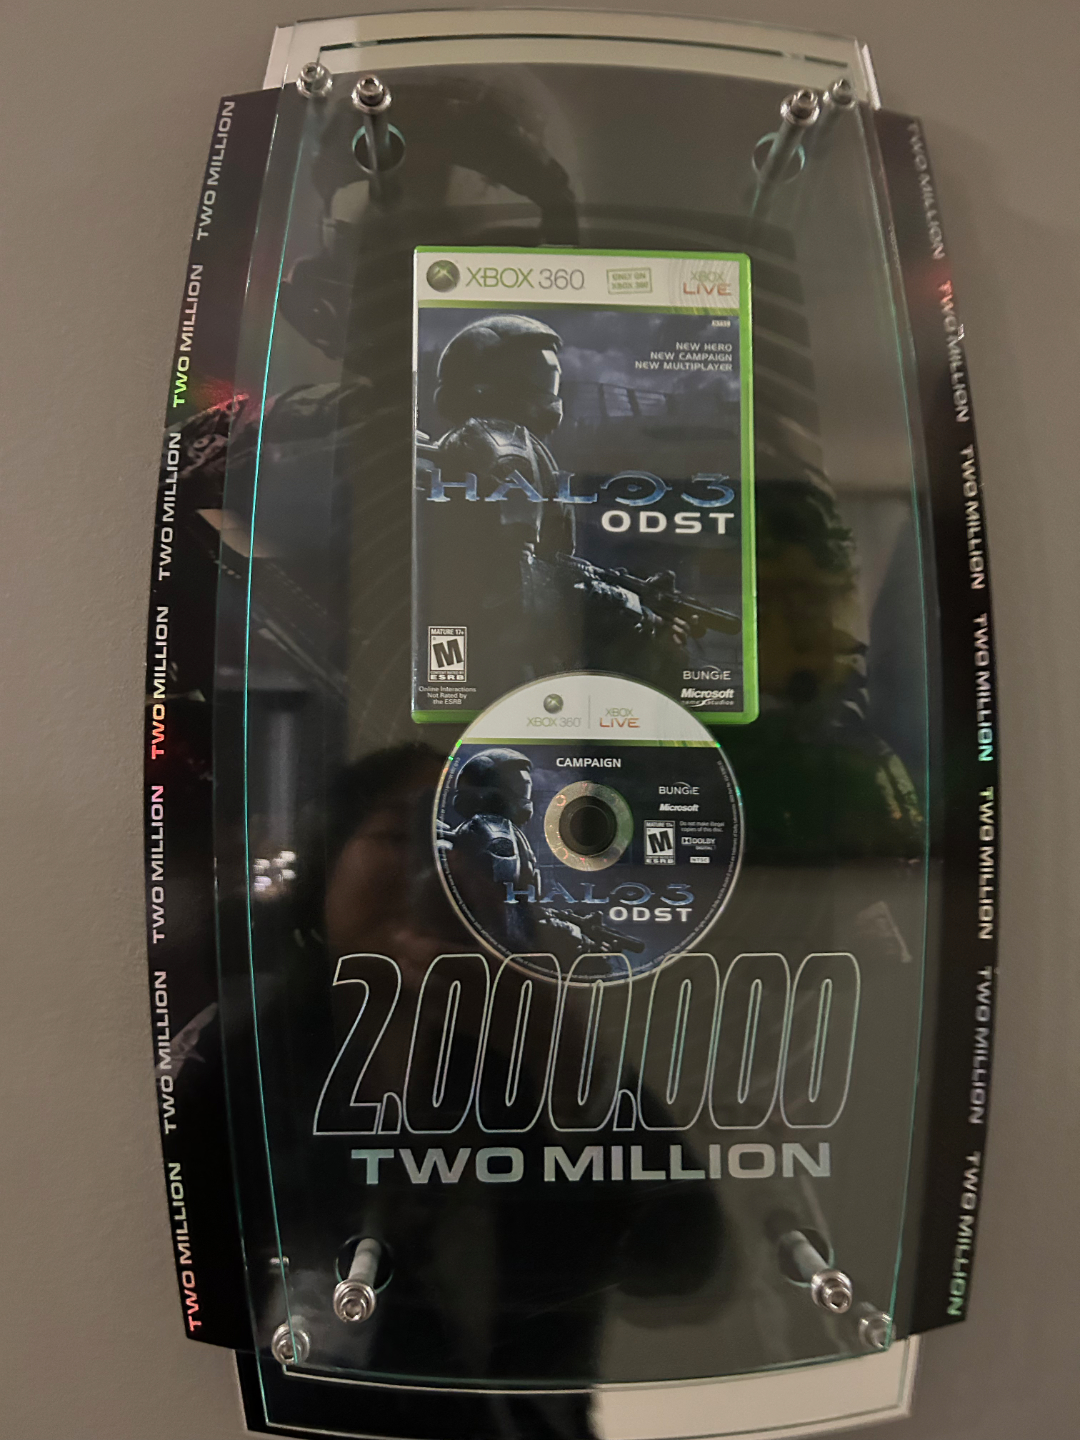 Halo 3 ODST 2 Million celebration plaque